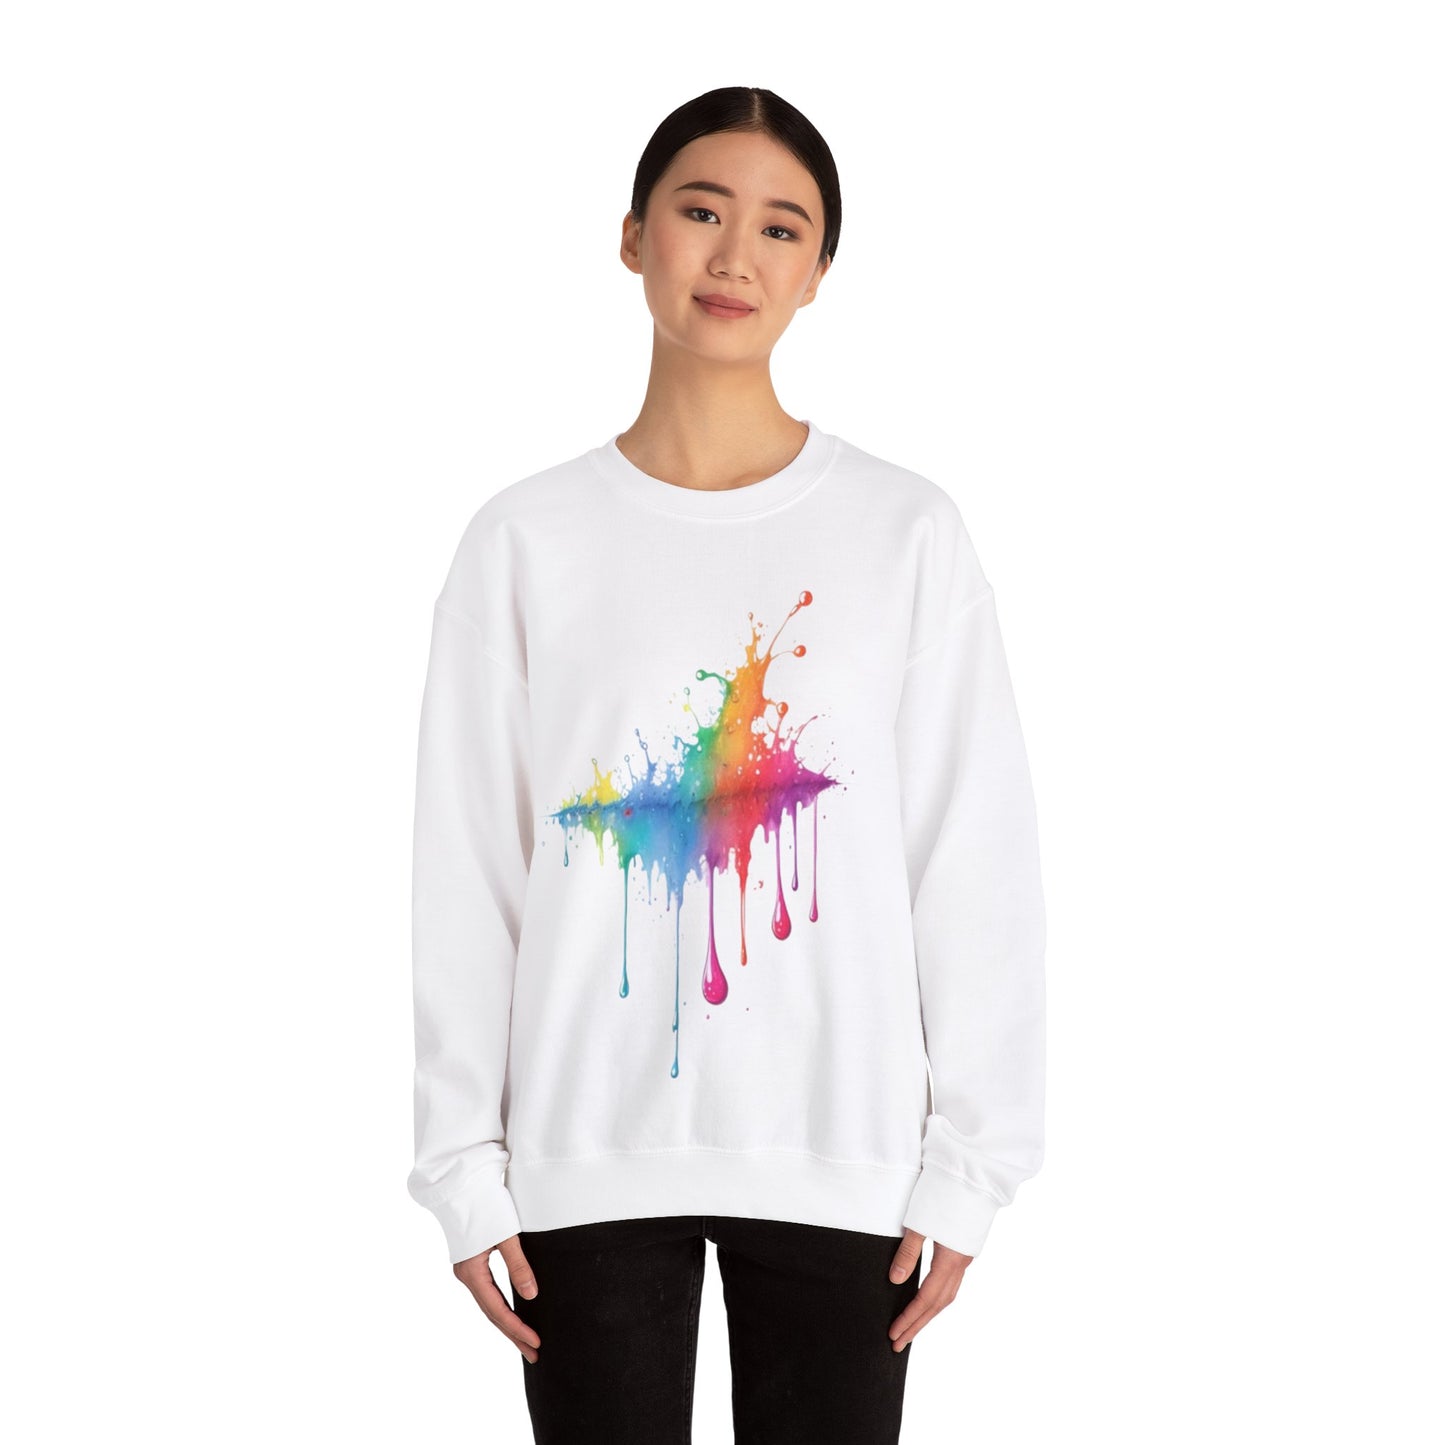 Colourful Raindrops - Unisex Crewneck Sweatshirt